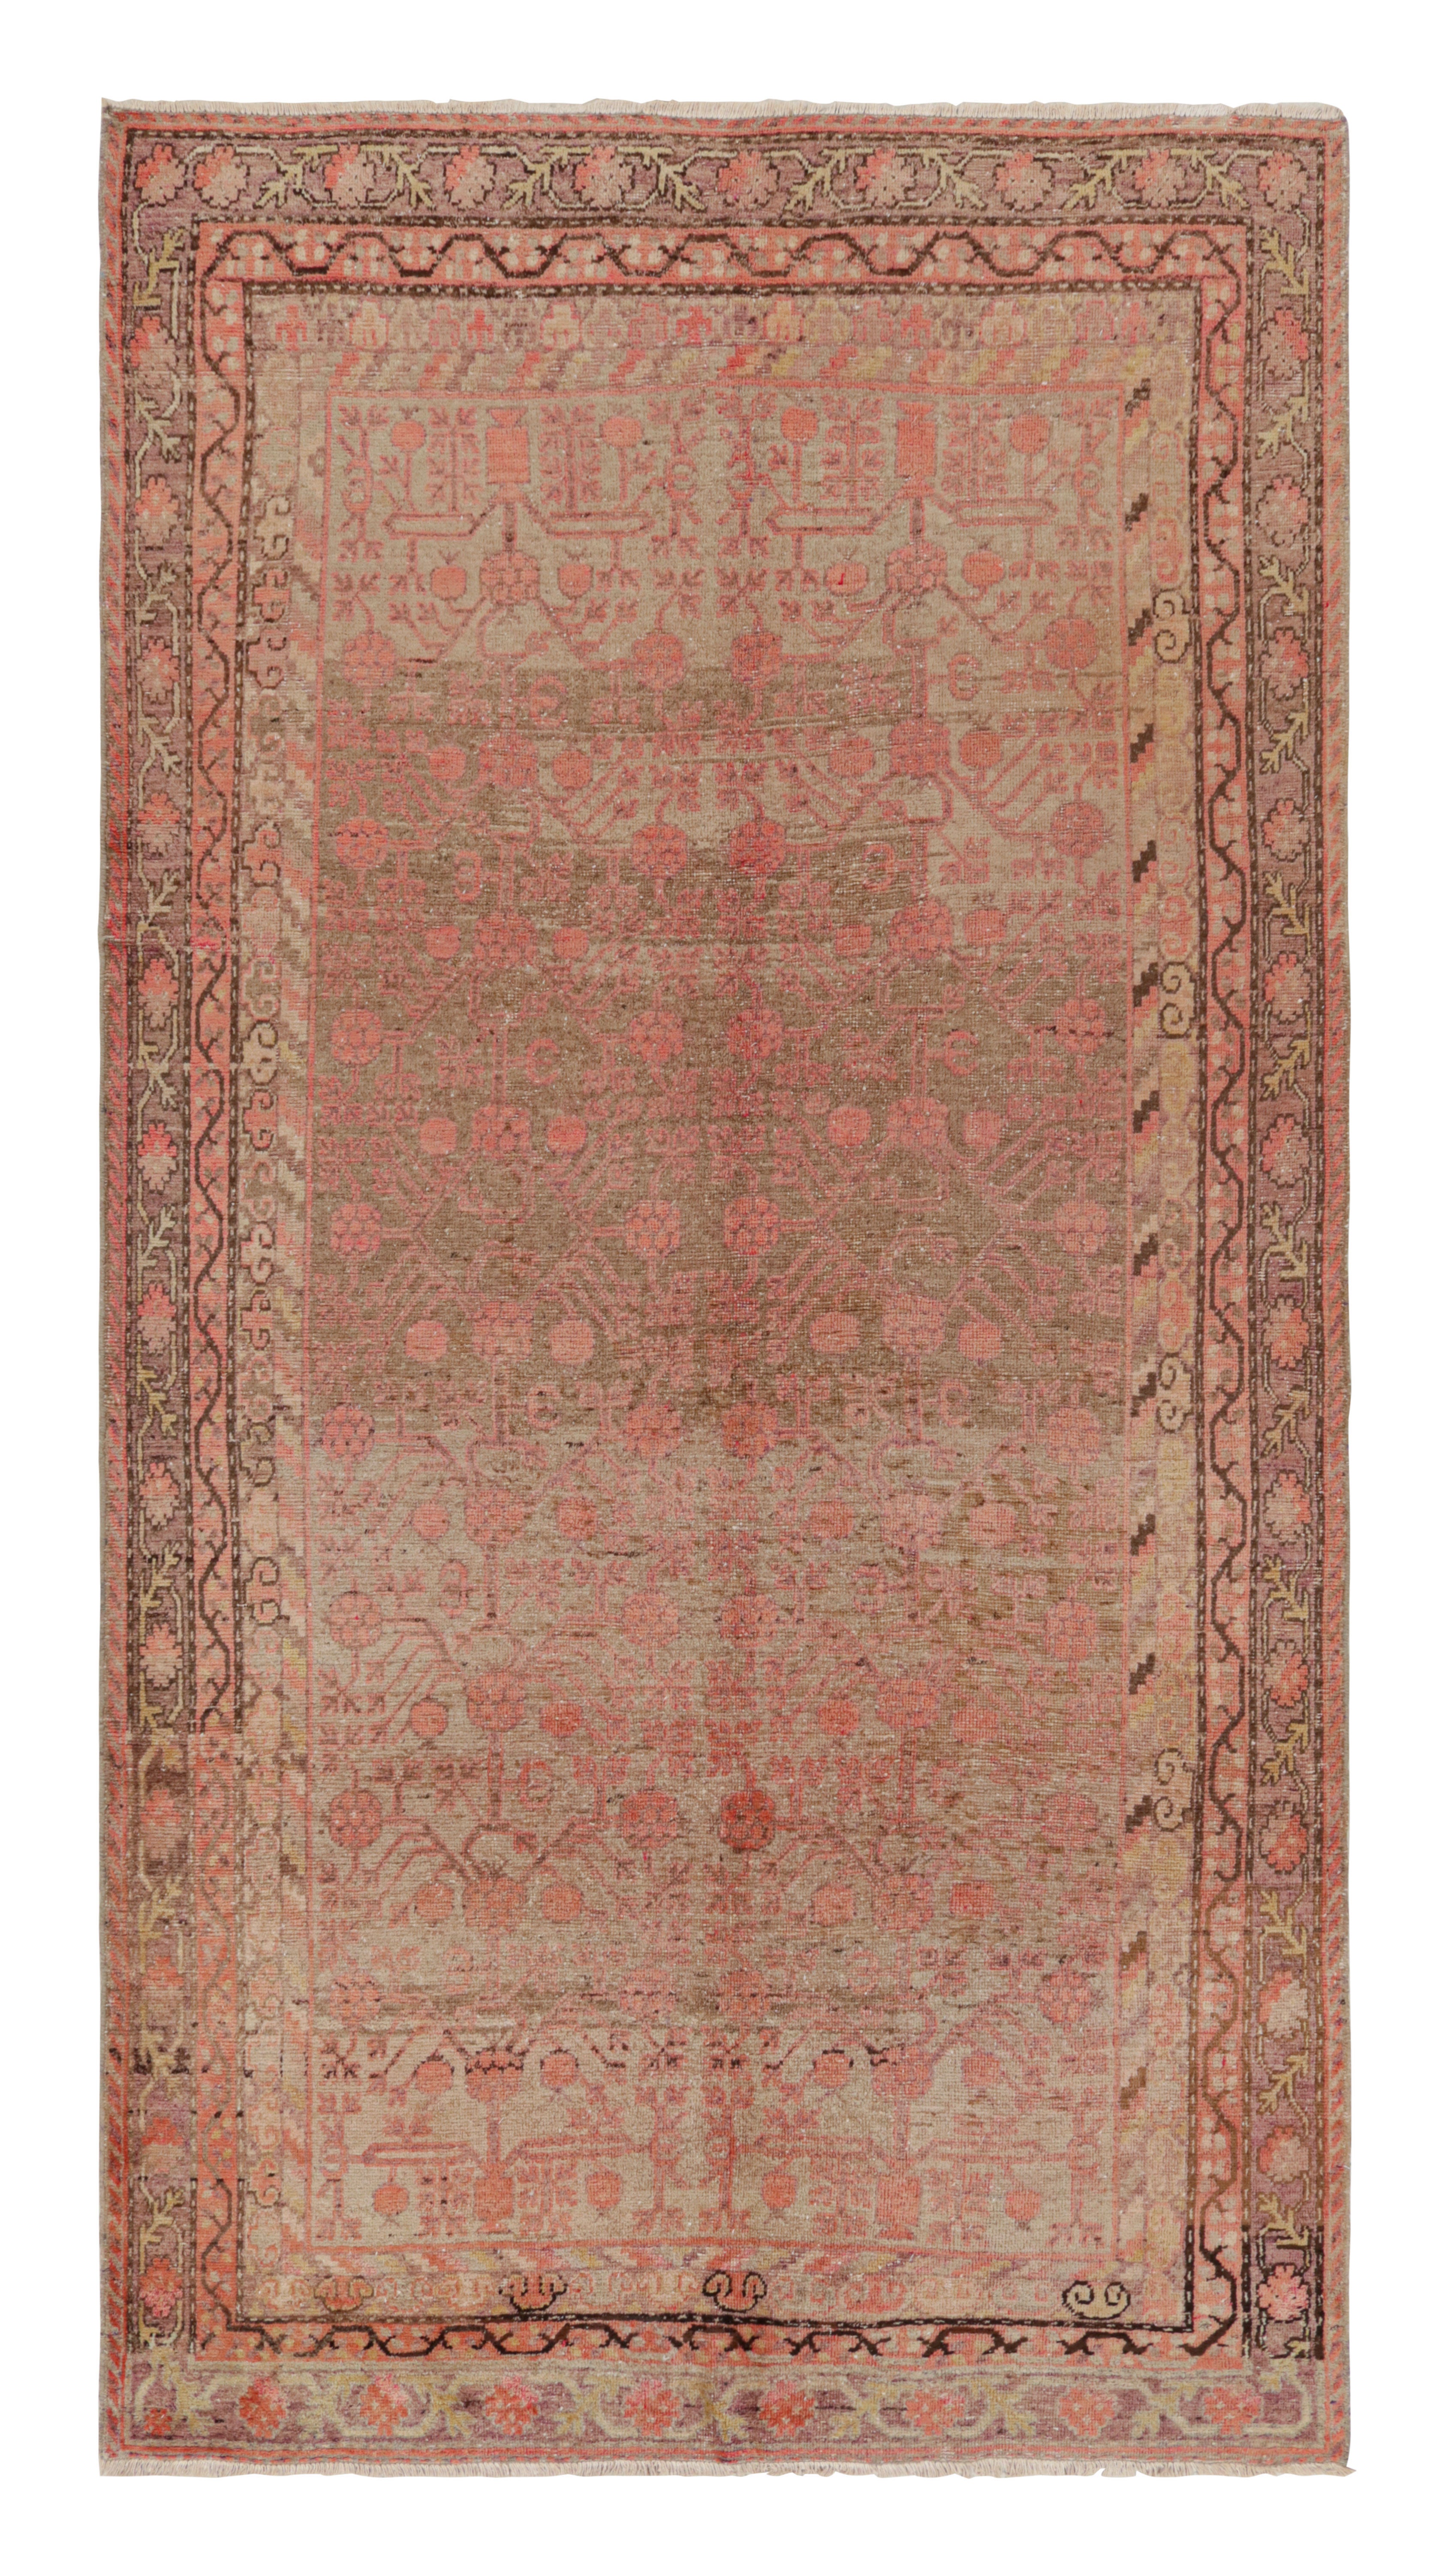 Mid Century Khotan Transitional Pink and Beige Wool Rug by Rug & Kilim